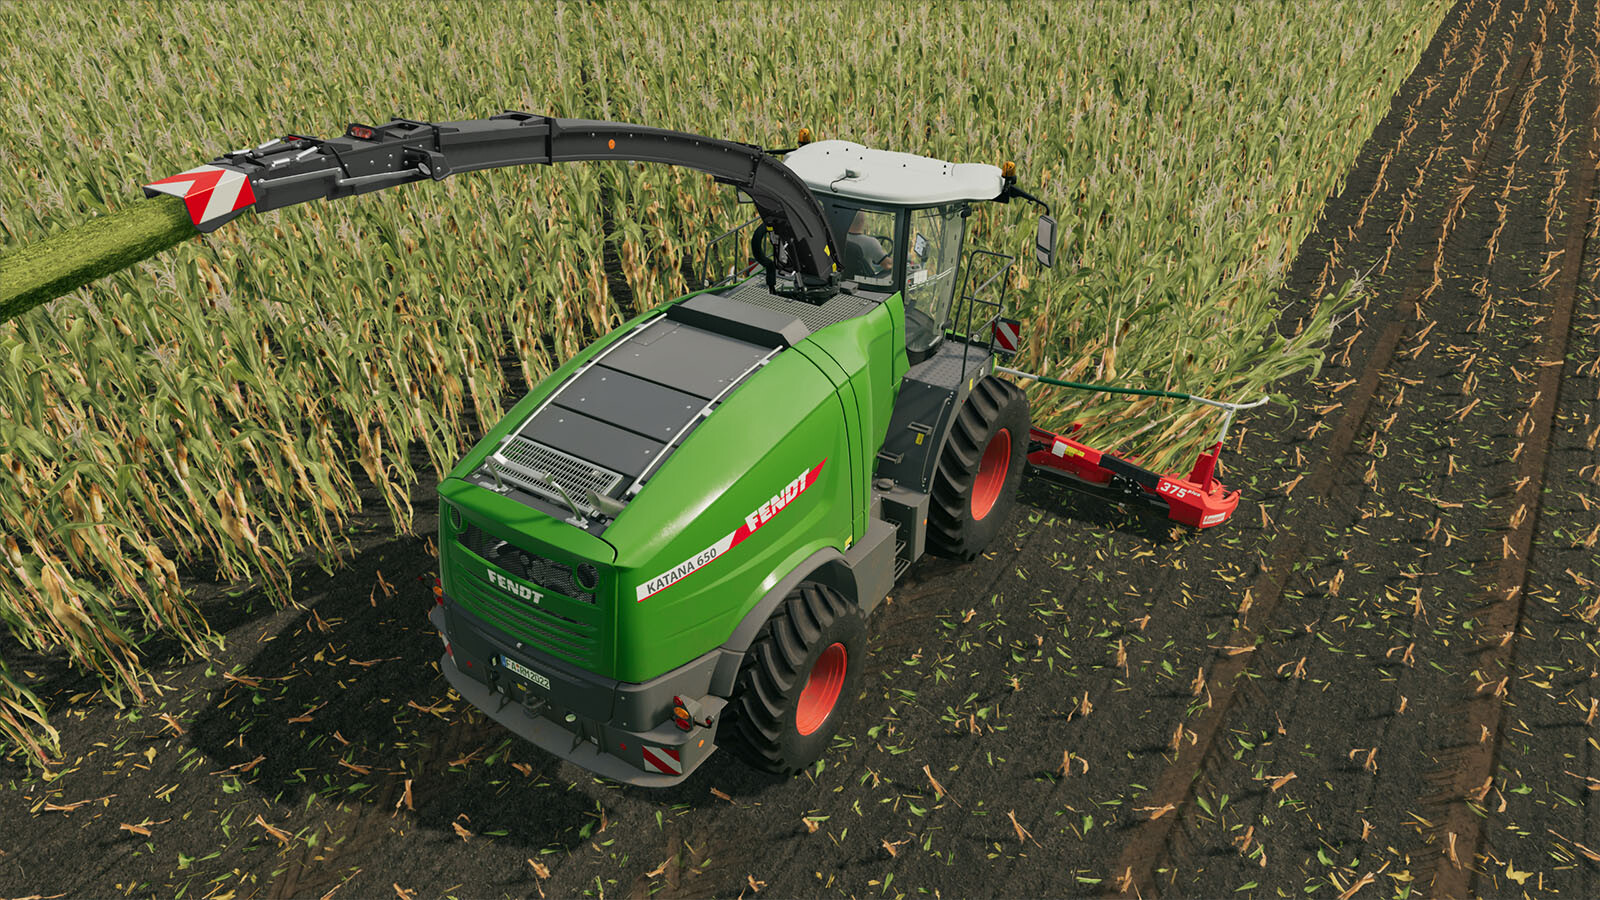 Buy Farming Simulator 22 - Platinum Edition, PC, Mac - Steam